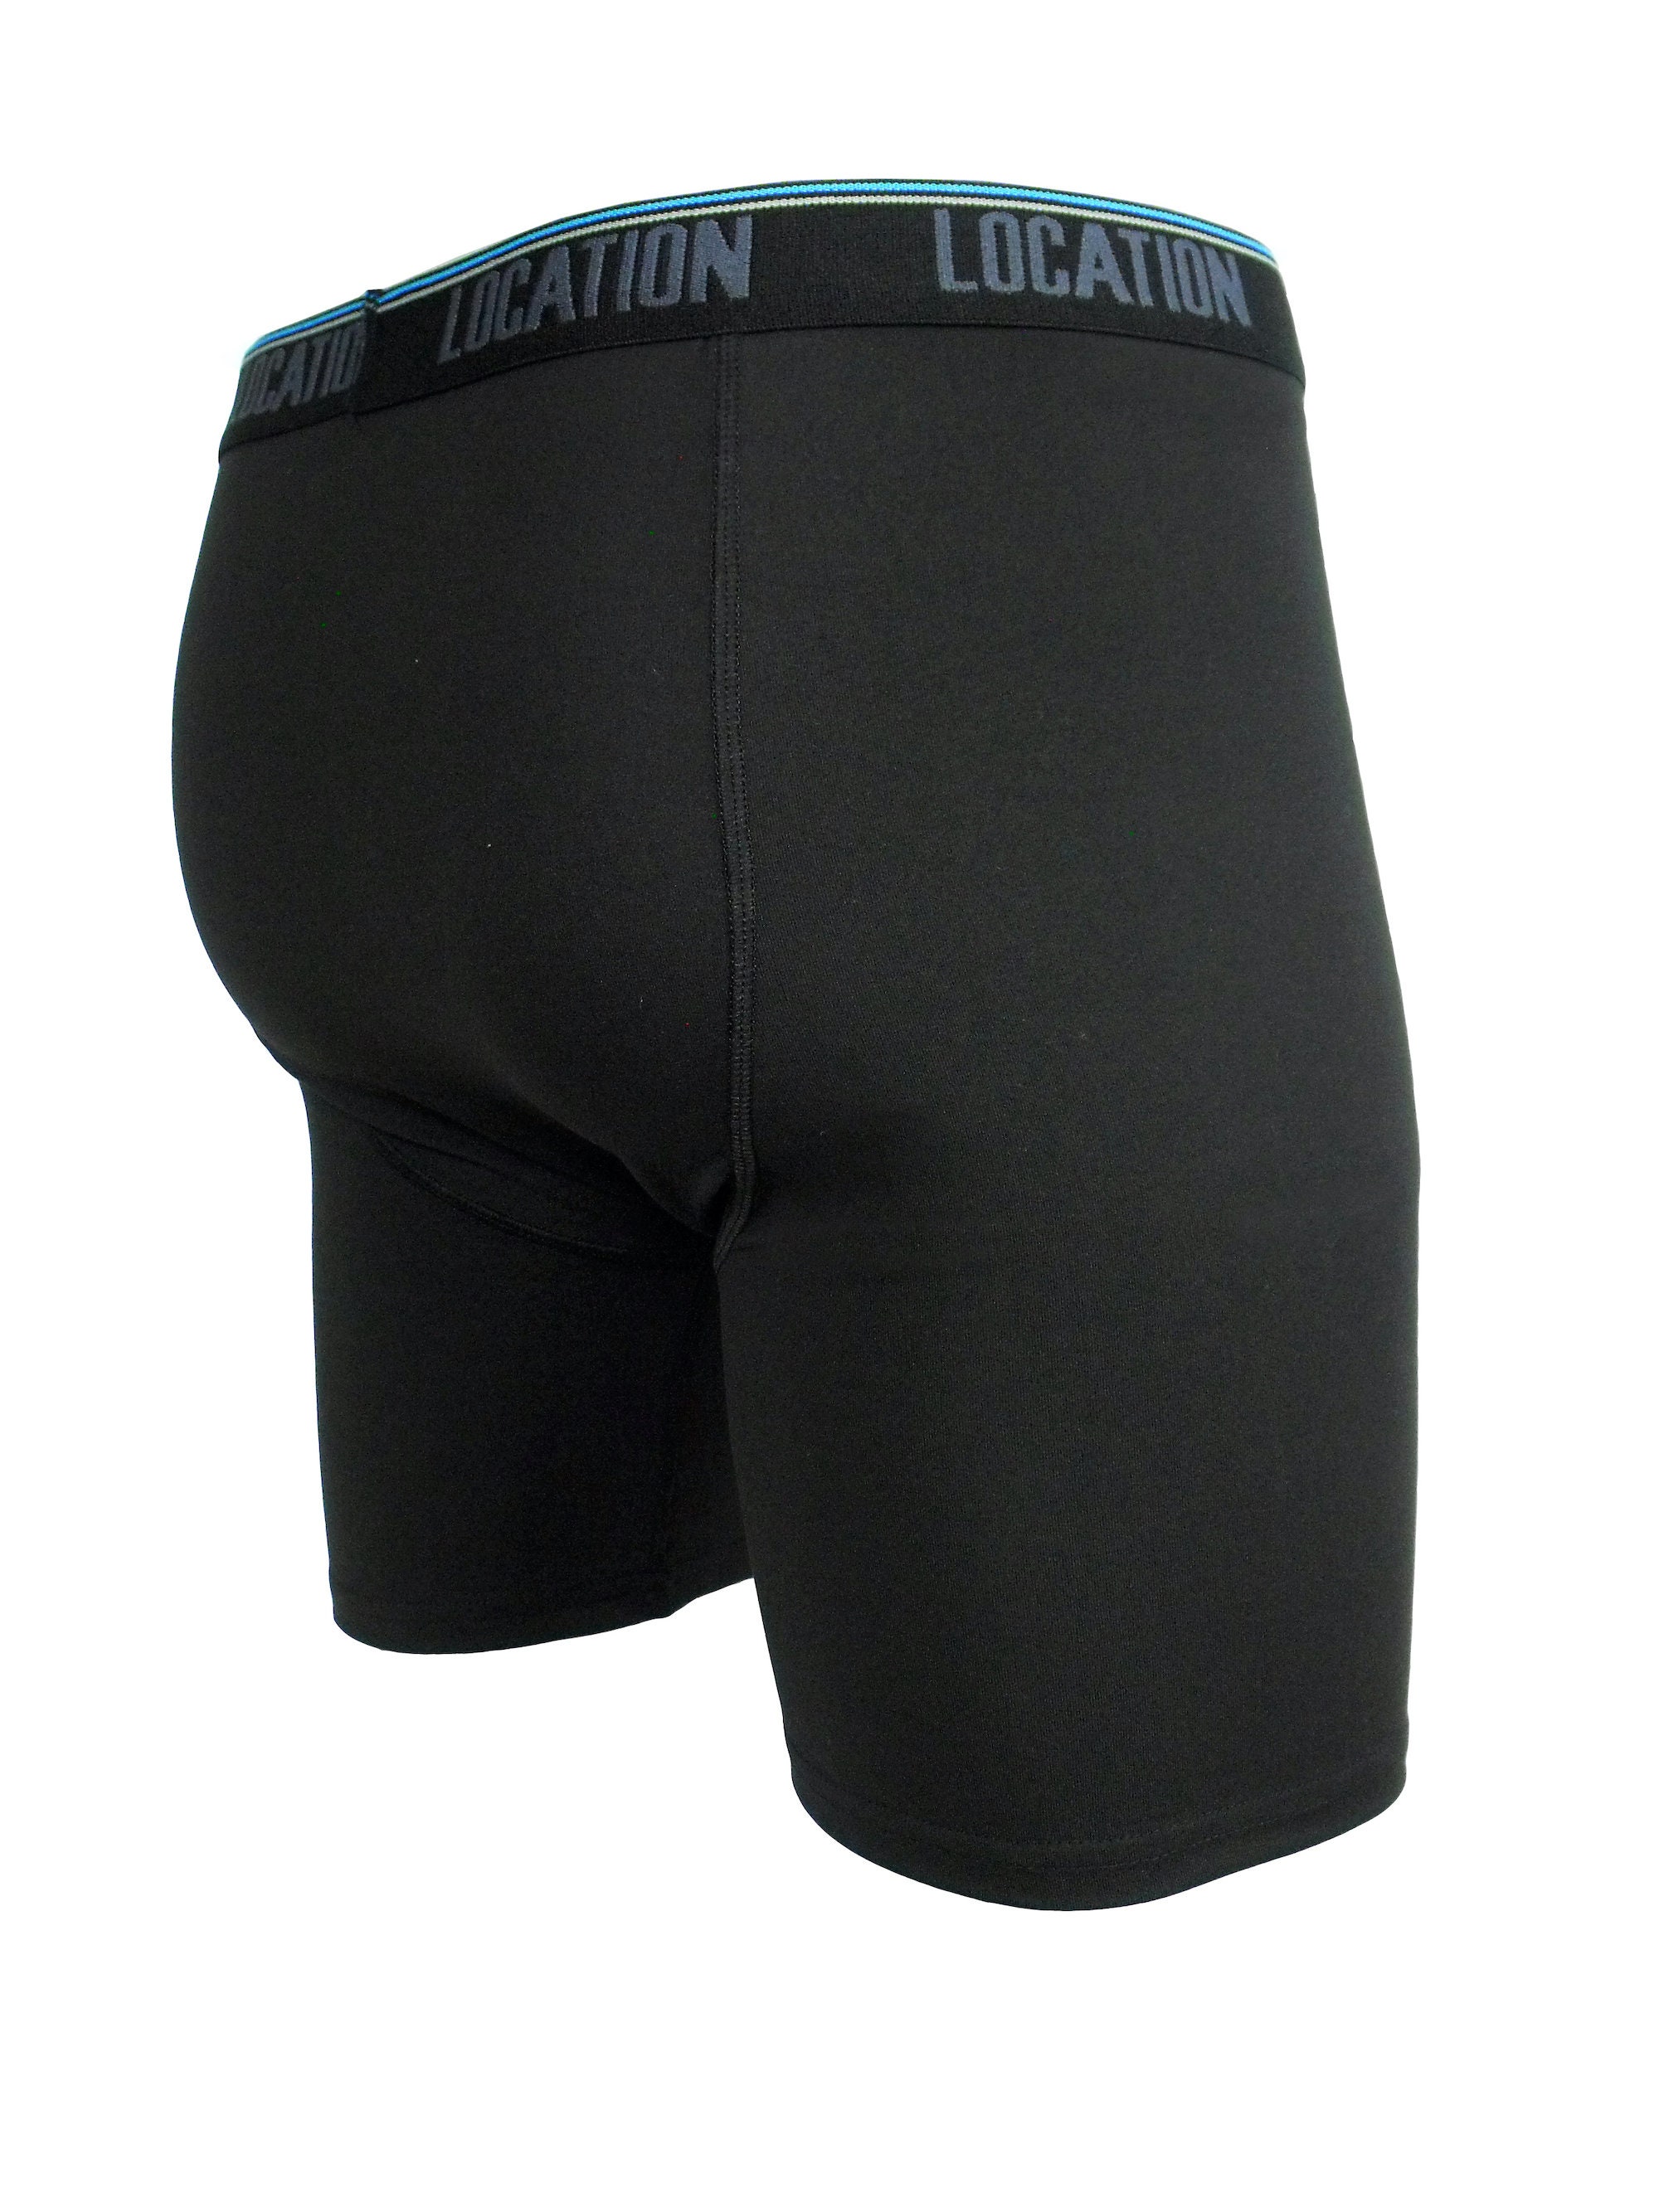 Mens Longer Leg Boxers Underwear Challenger3 & 1 3 Pack Stash Pocket Zipped  Front Pocket Anti Chafing Stretch Cotton Feel Comfort Sport 